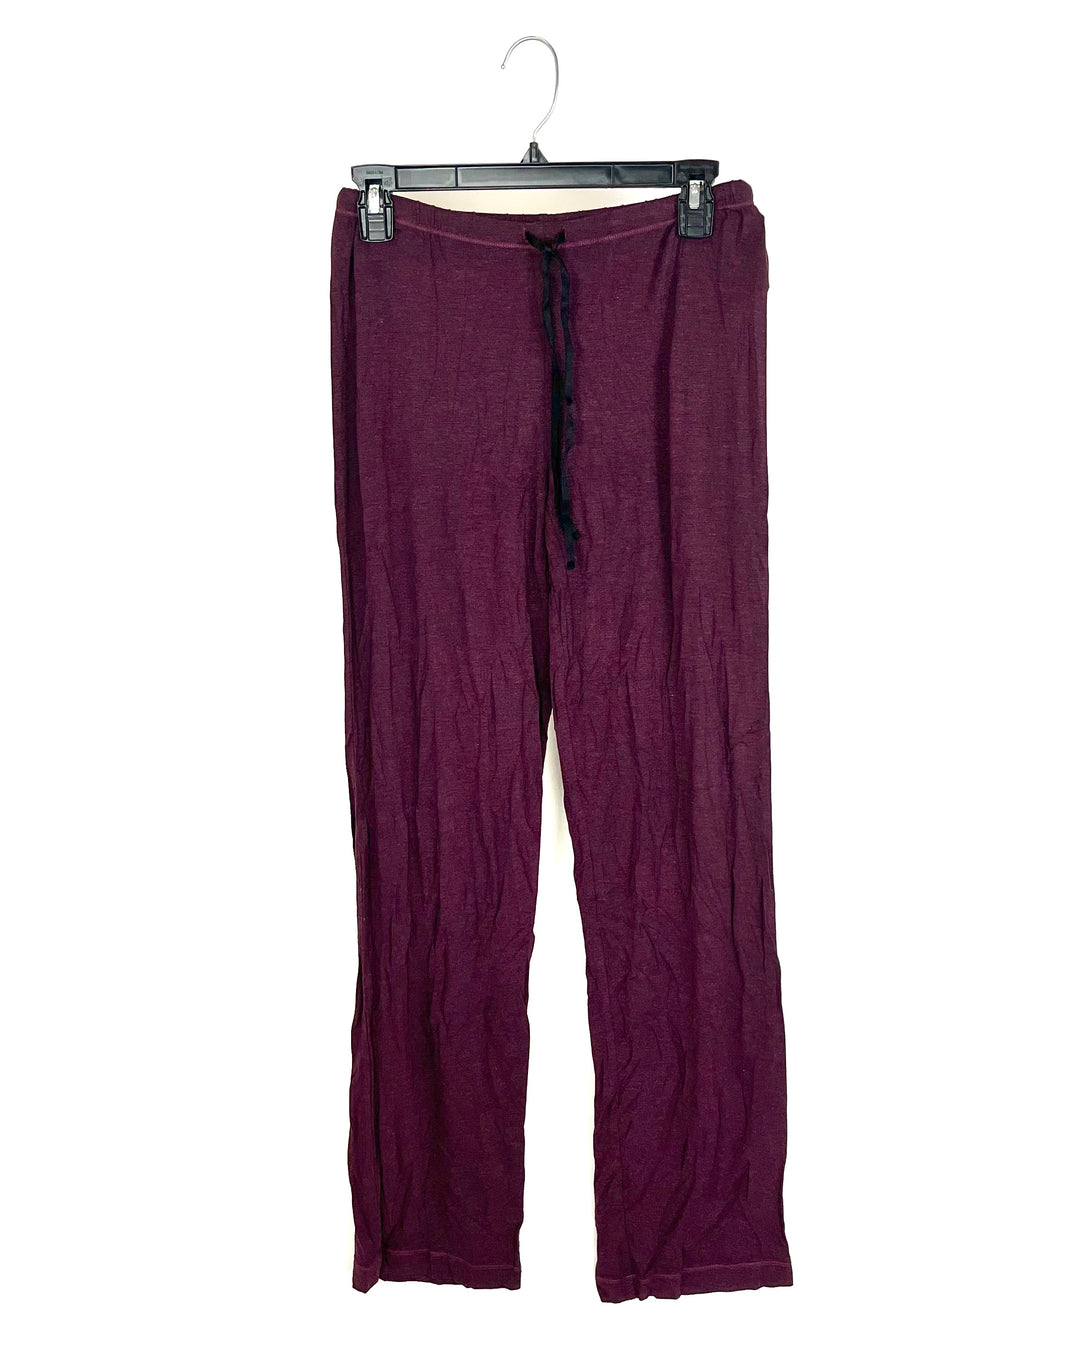 Dark Burgundy Lounge Pants - Size 4/6